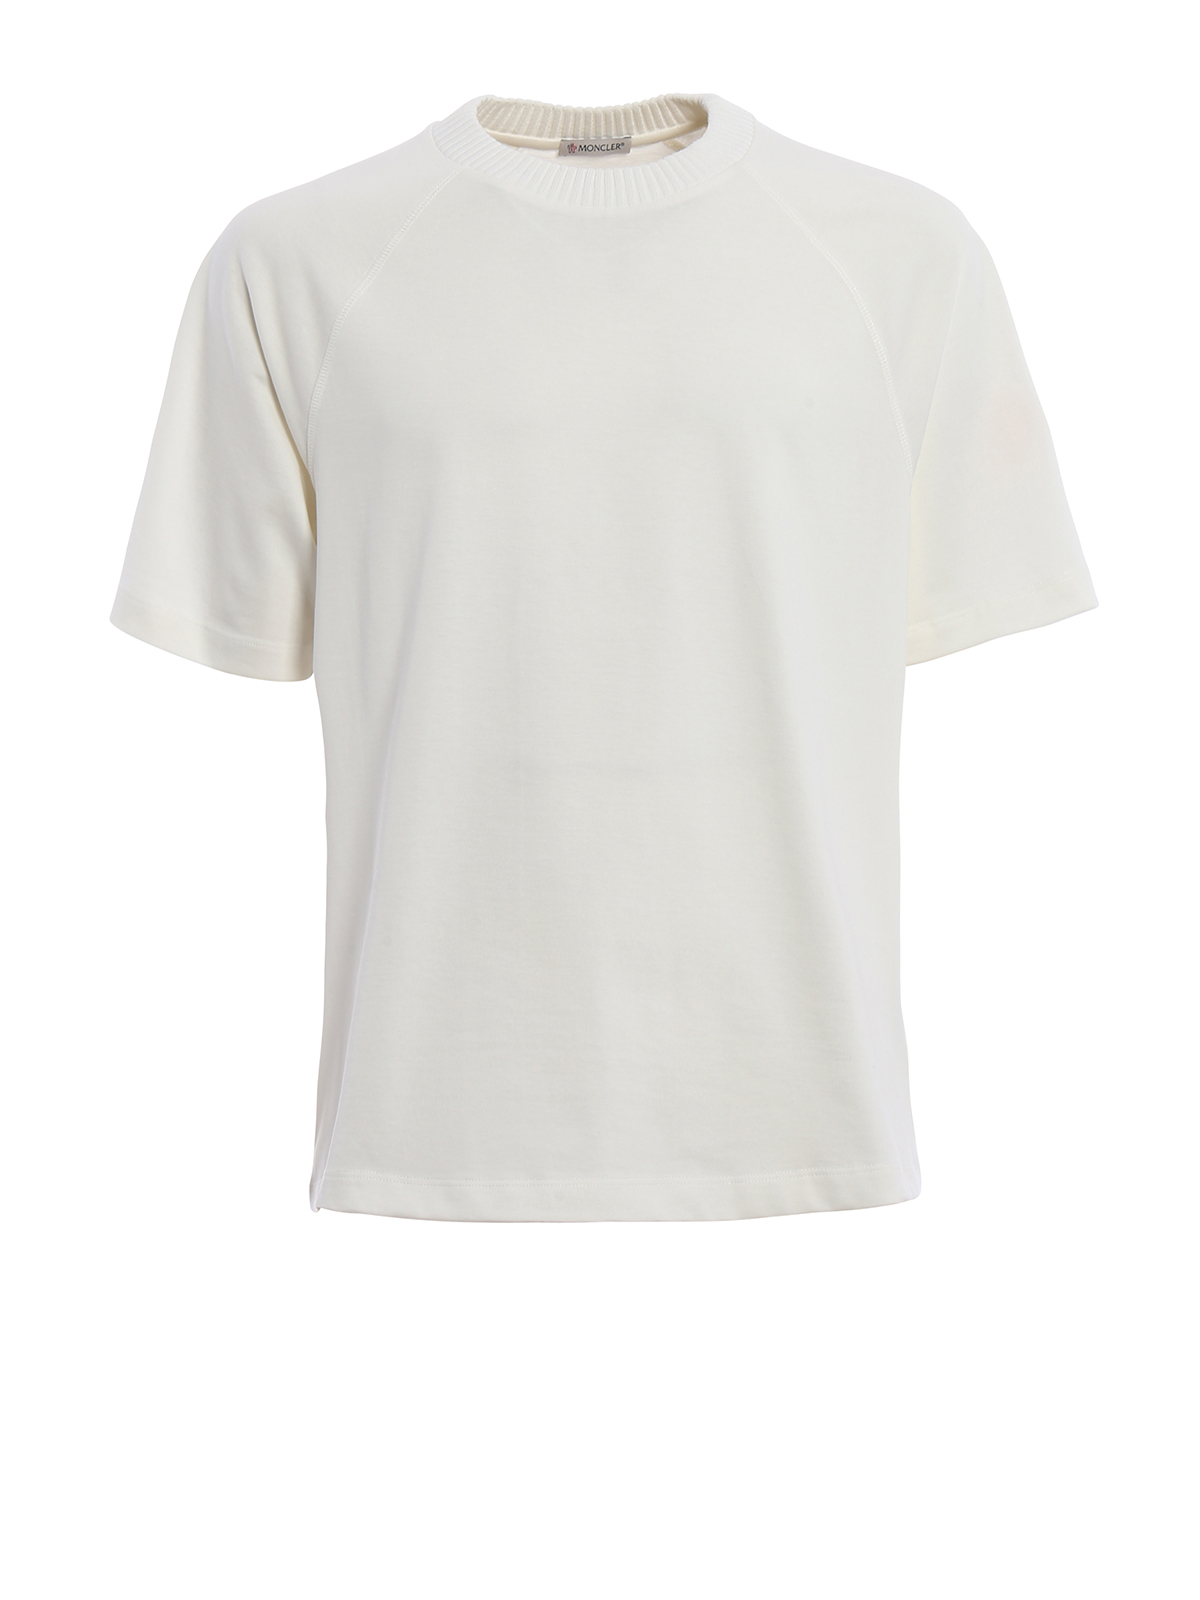 moncler x off white t shirt